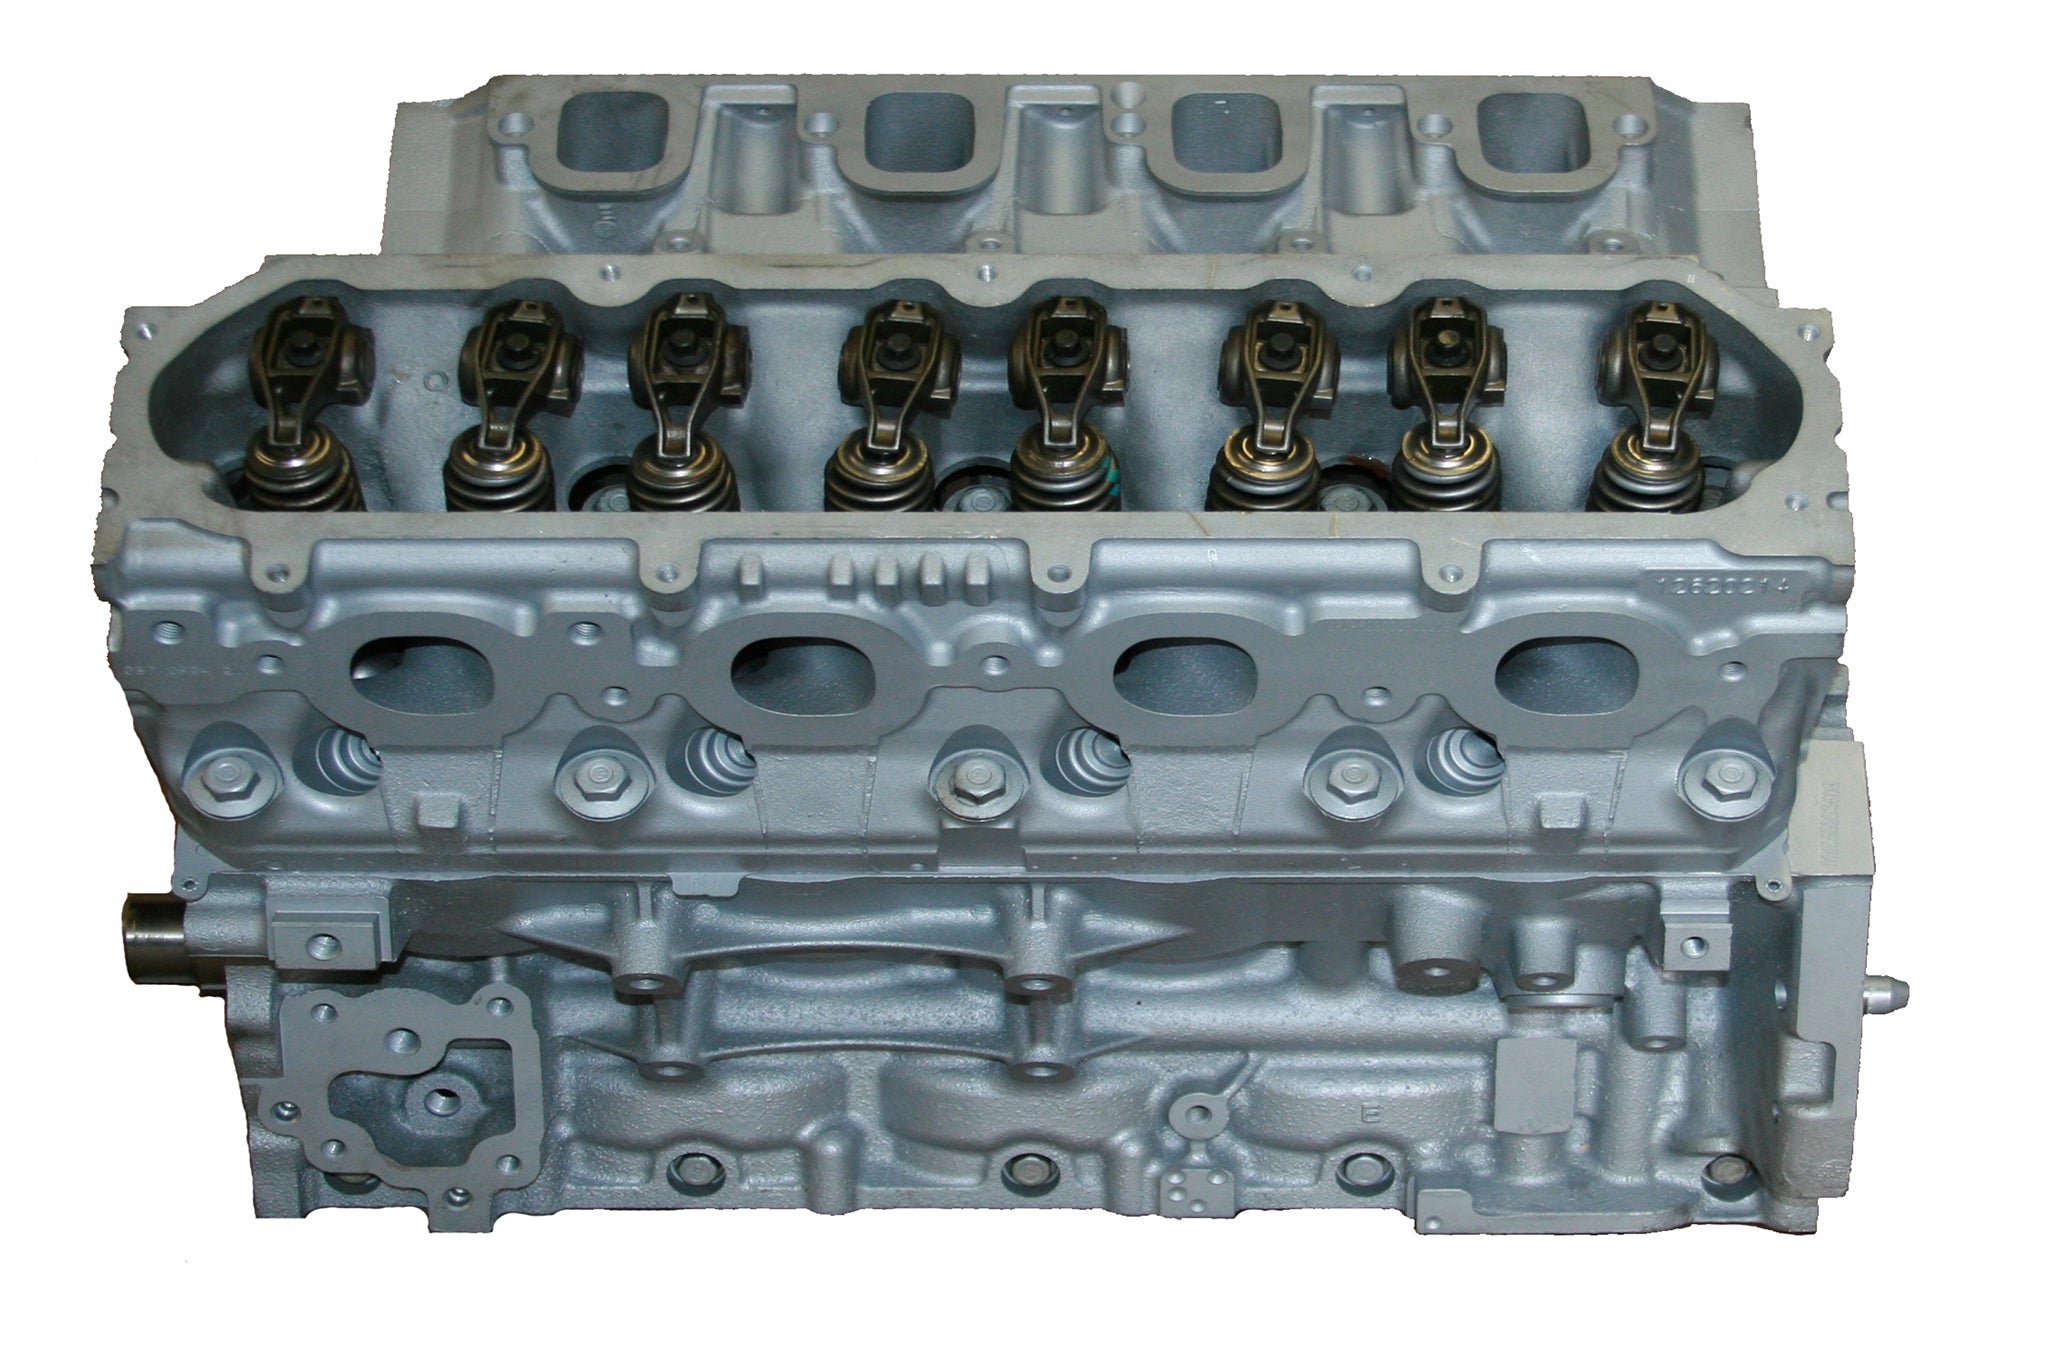 2014-18 Chevy 5.3L L83 Vin C Flex Aluminum Block VVT GDI Rebuilt Engine